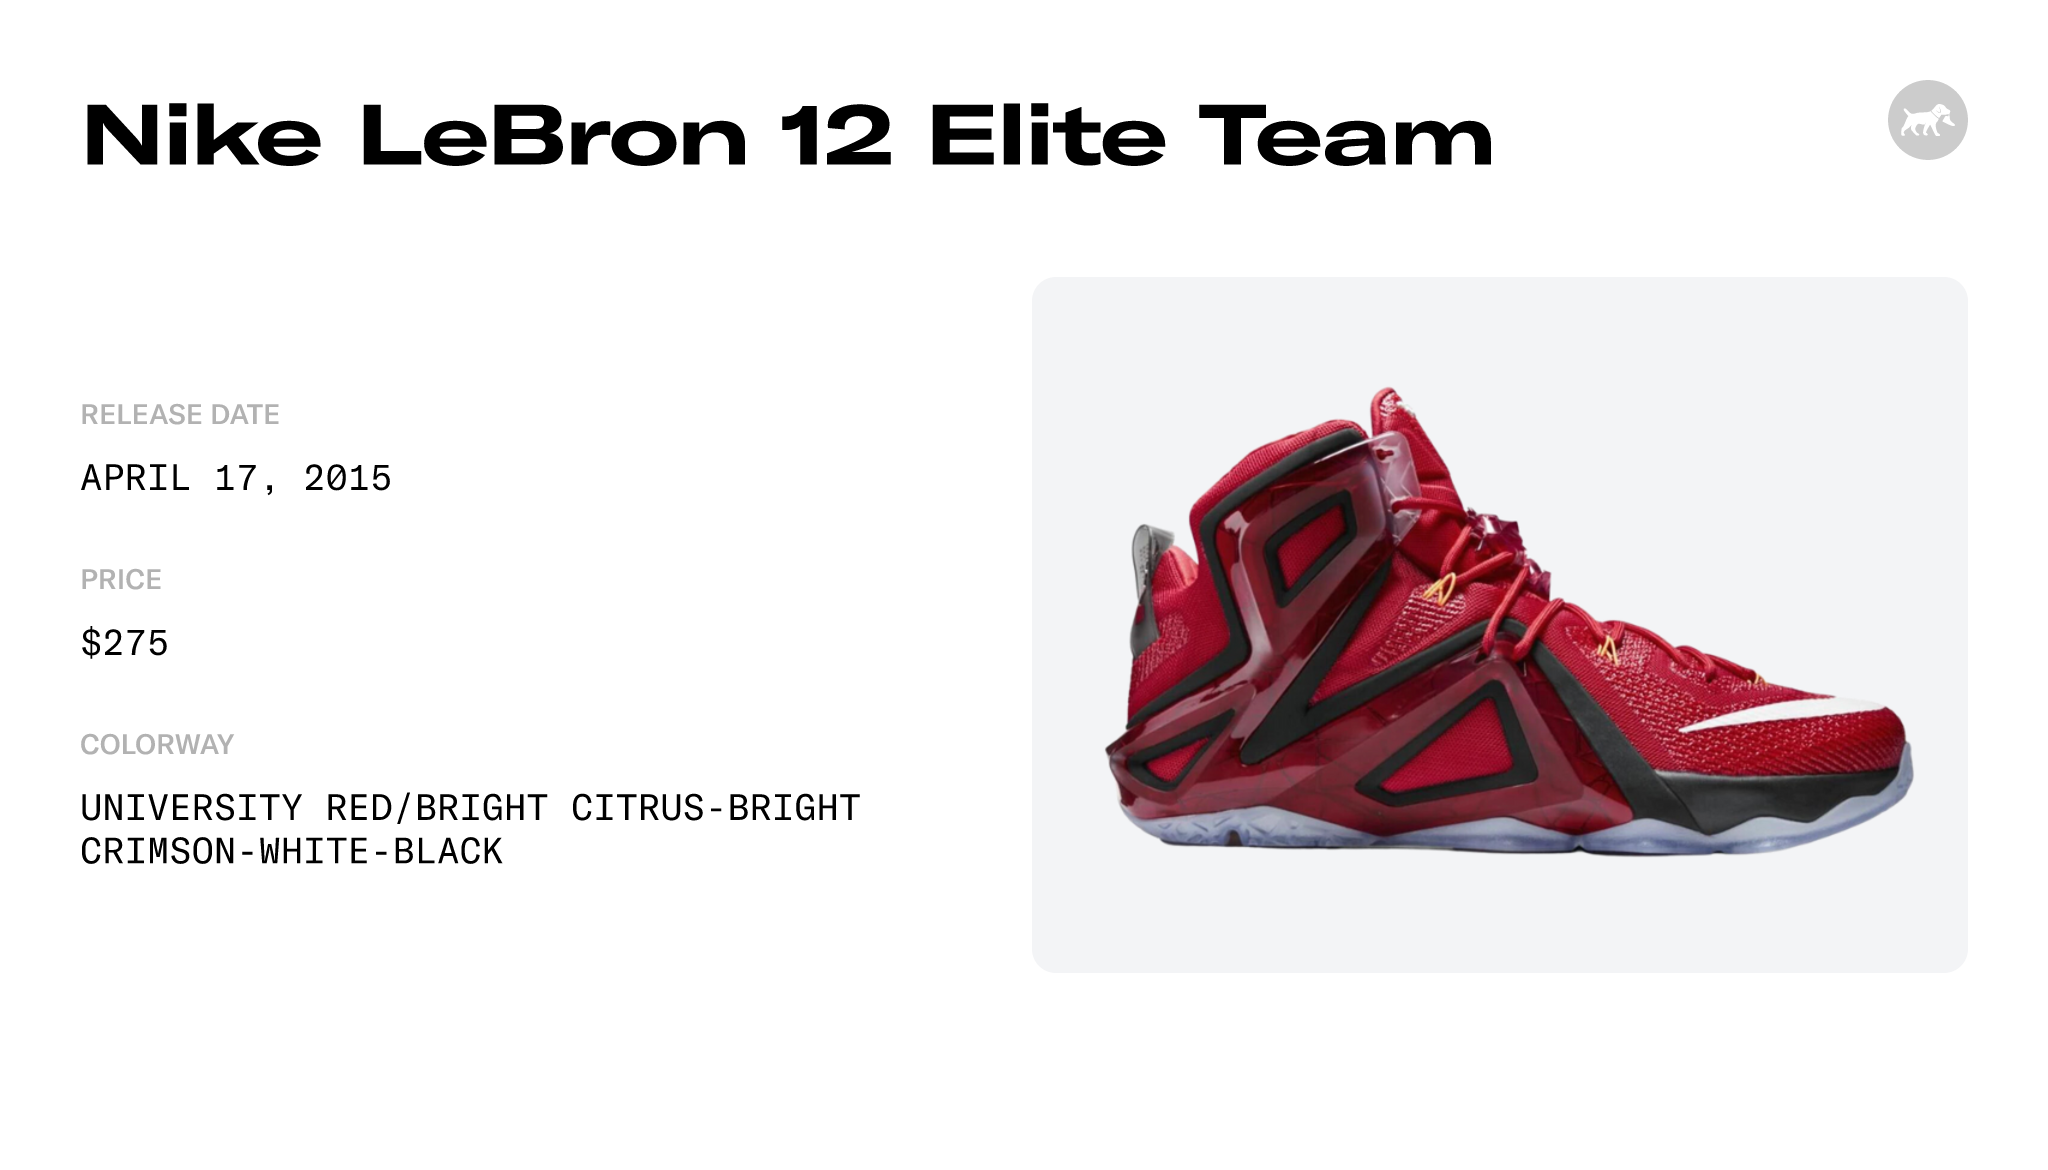 Nike LeBron 12 Elite Team - 724559-618 Raffles and Release Date